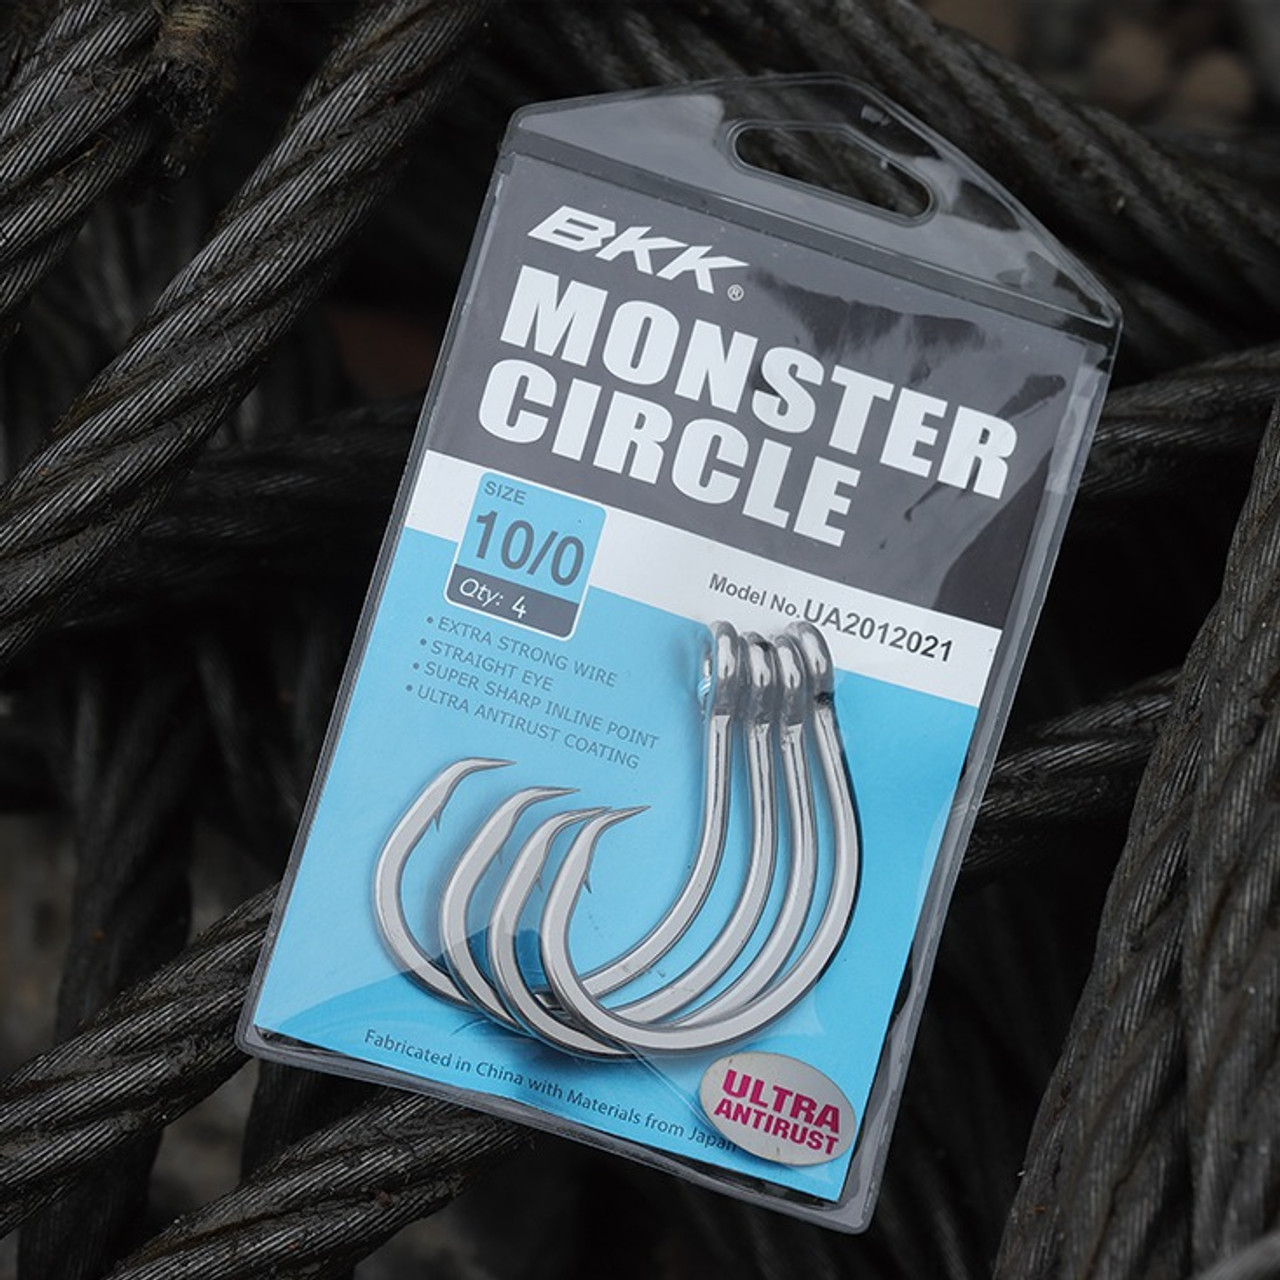 BKK Monster Circle Hook Size 12/0